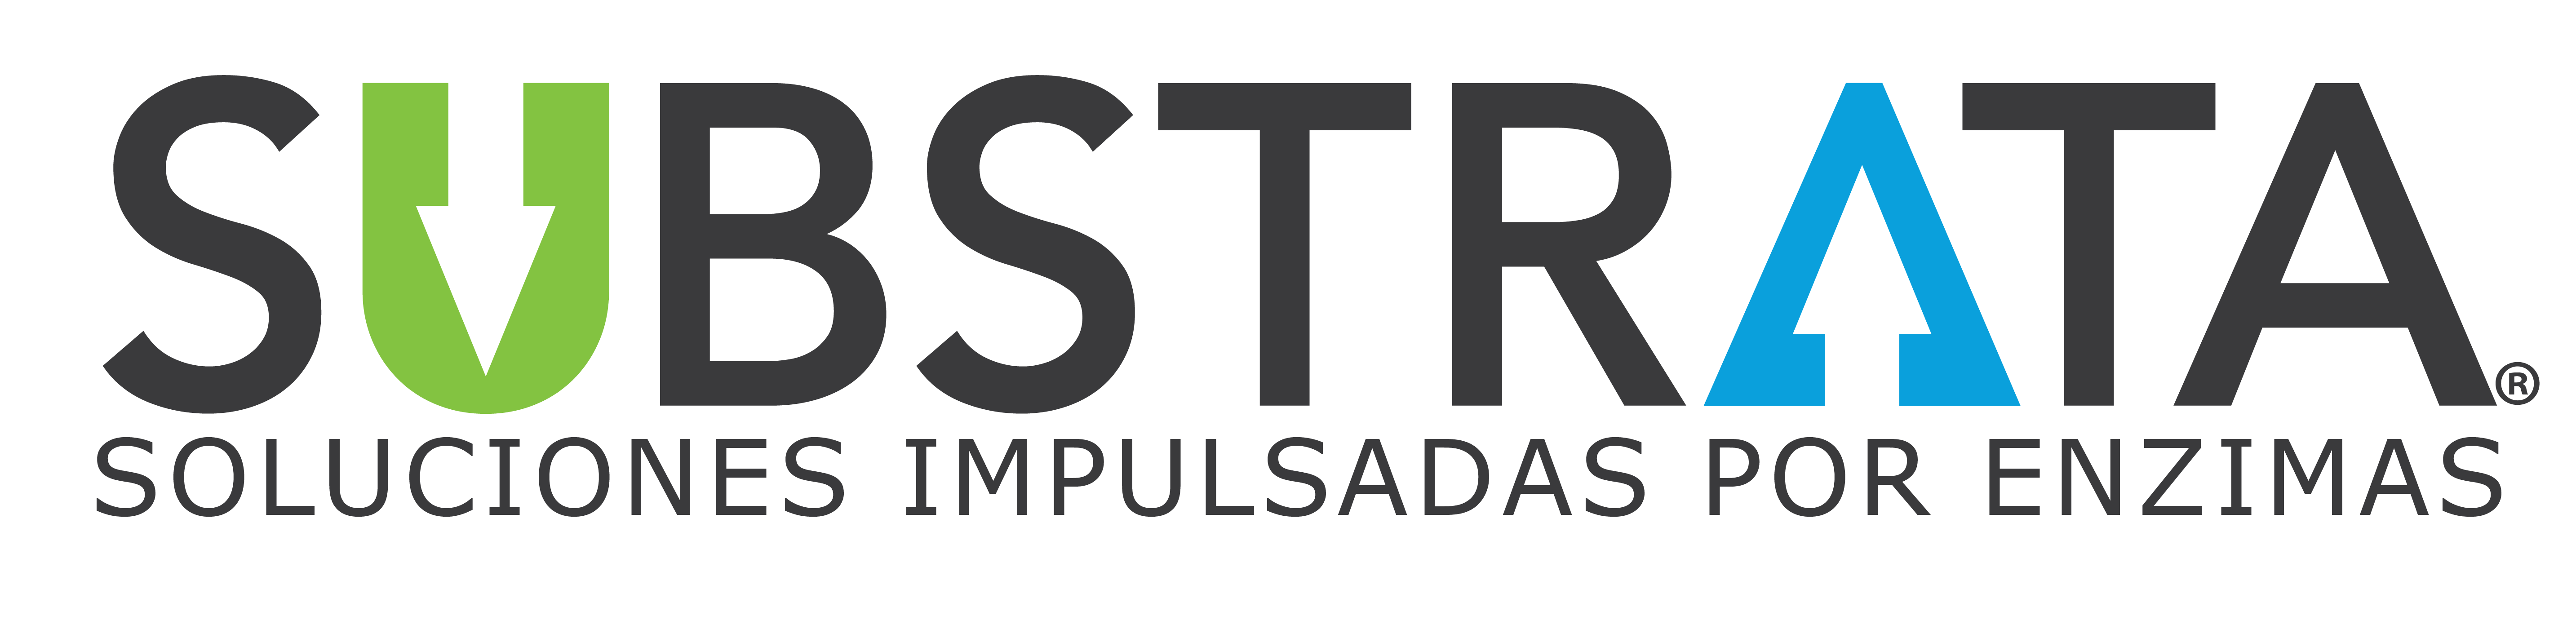 SubStrata_Logo_Tagline_Spanish-01-01